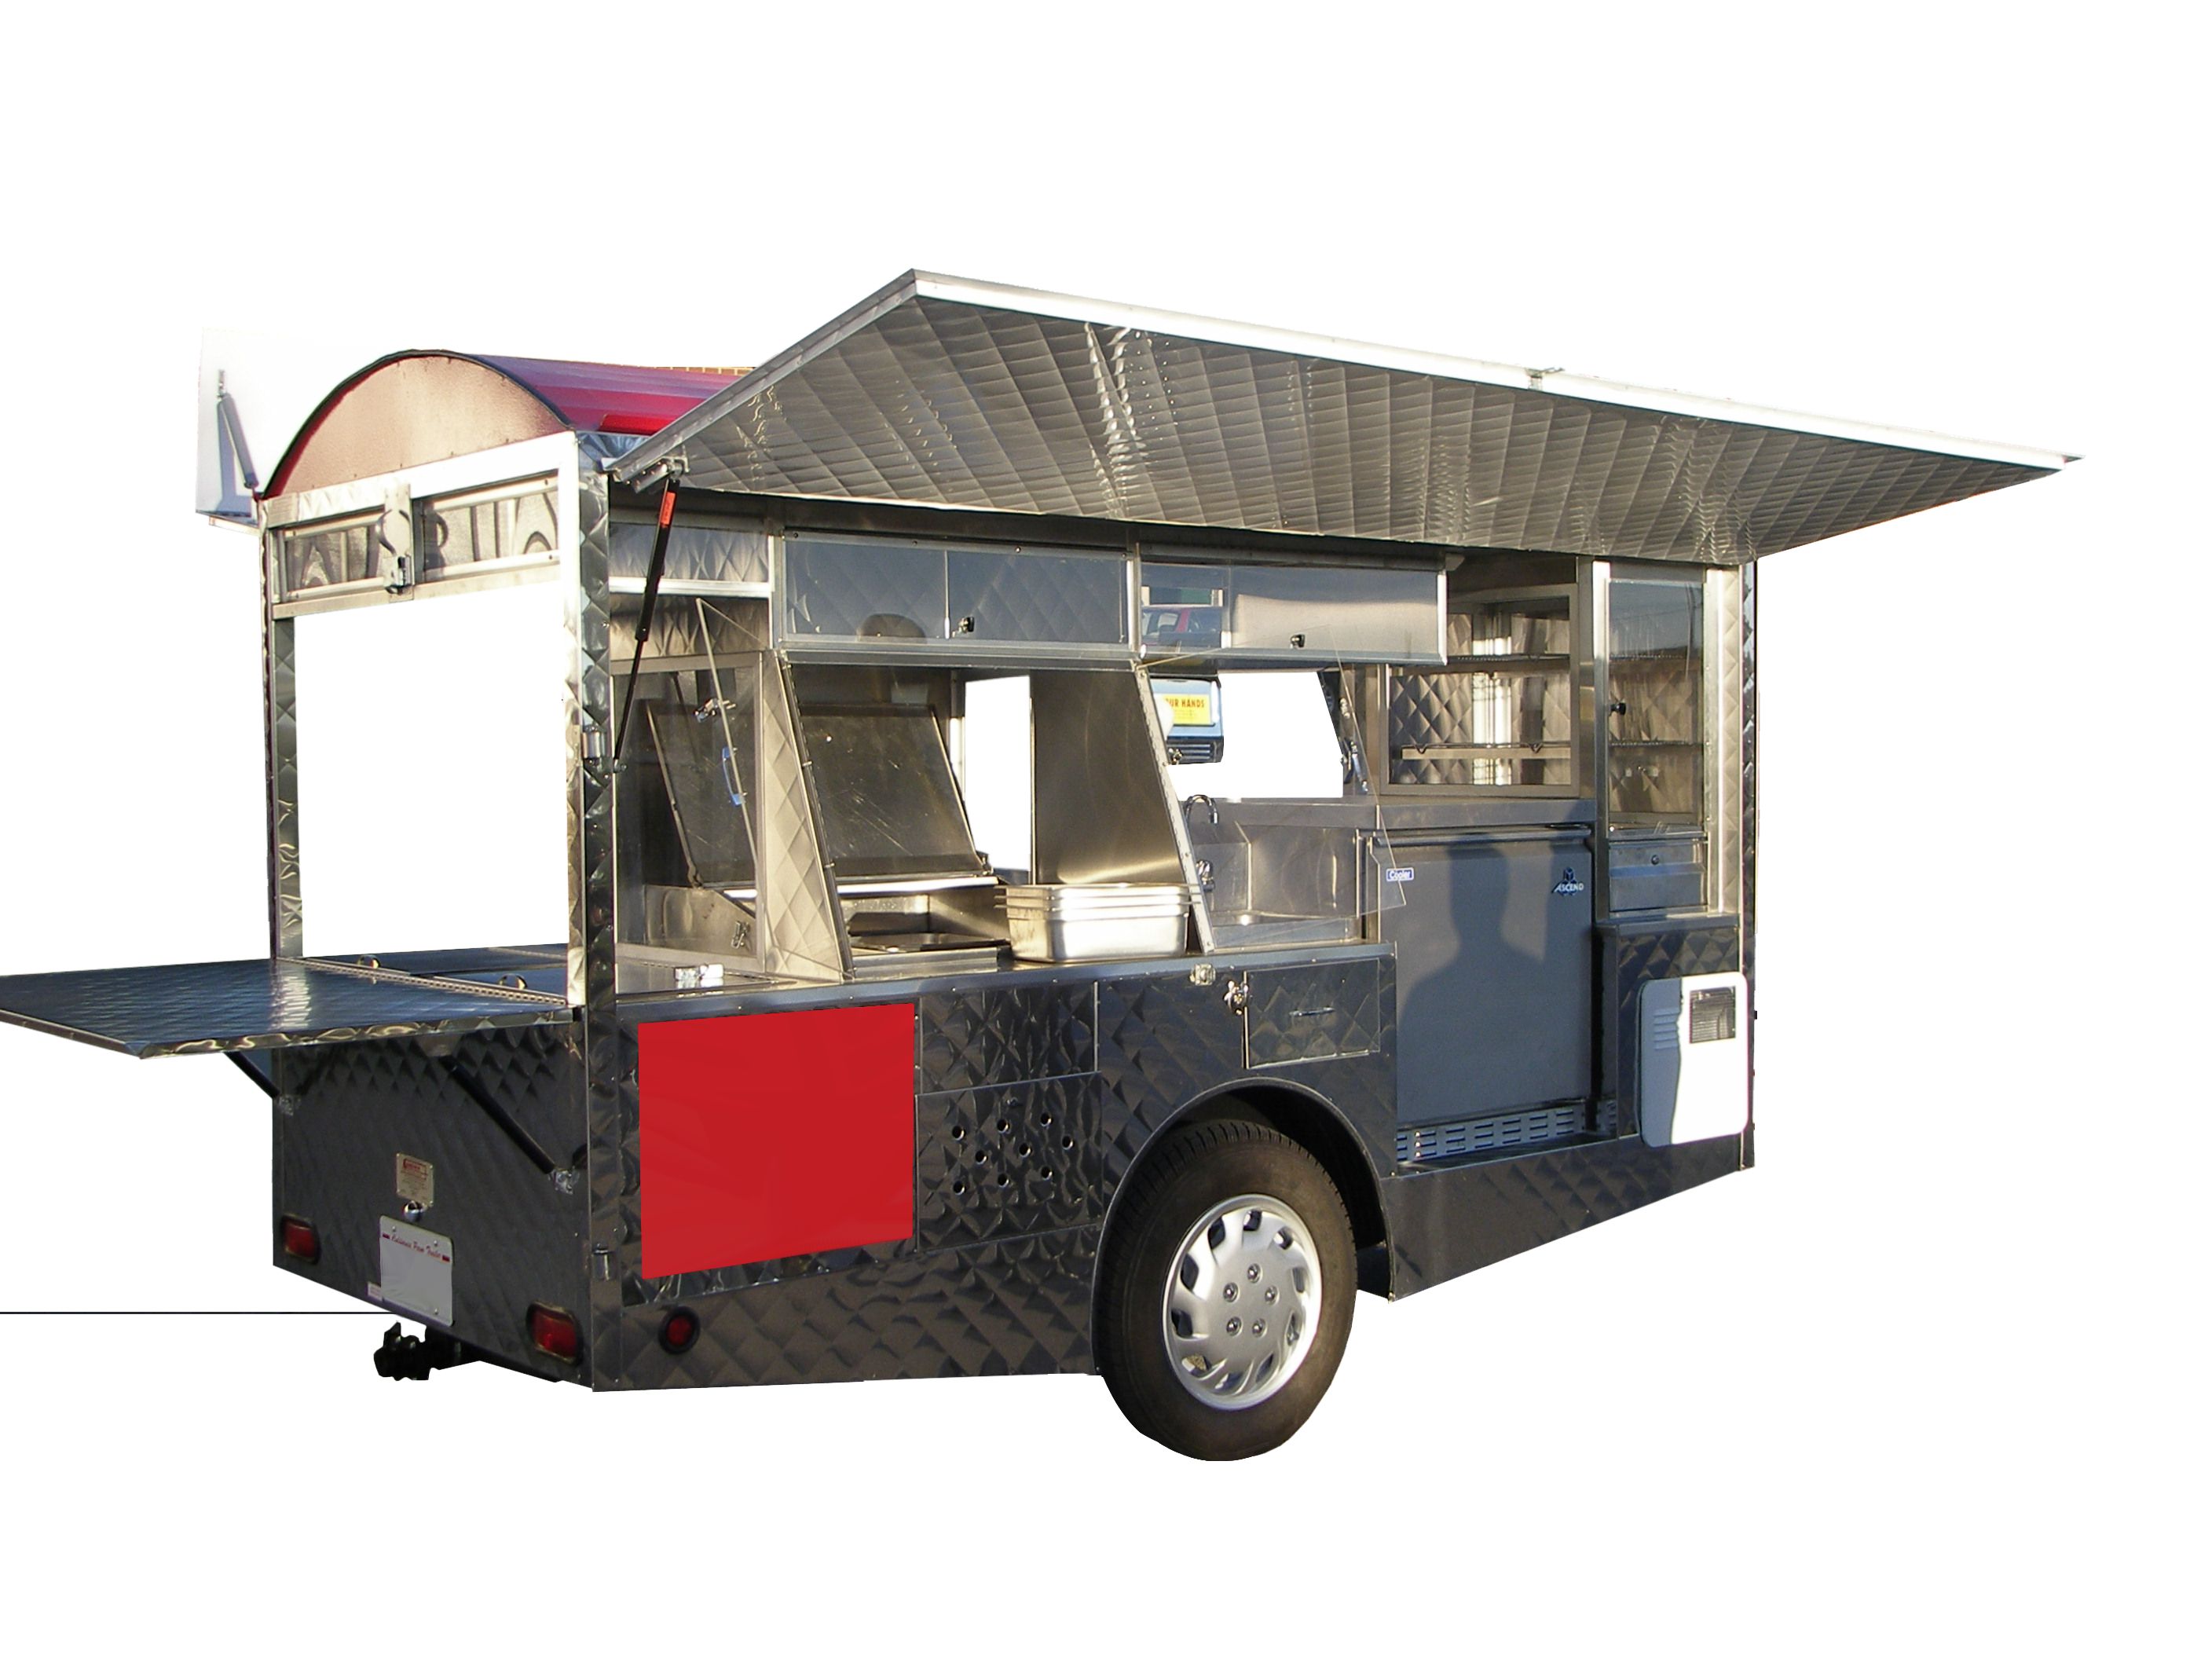 Armenco California-Compliant Steam Table Based Hot dog cart